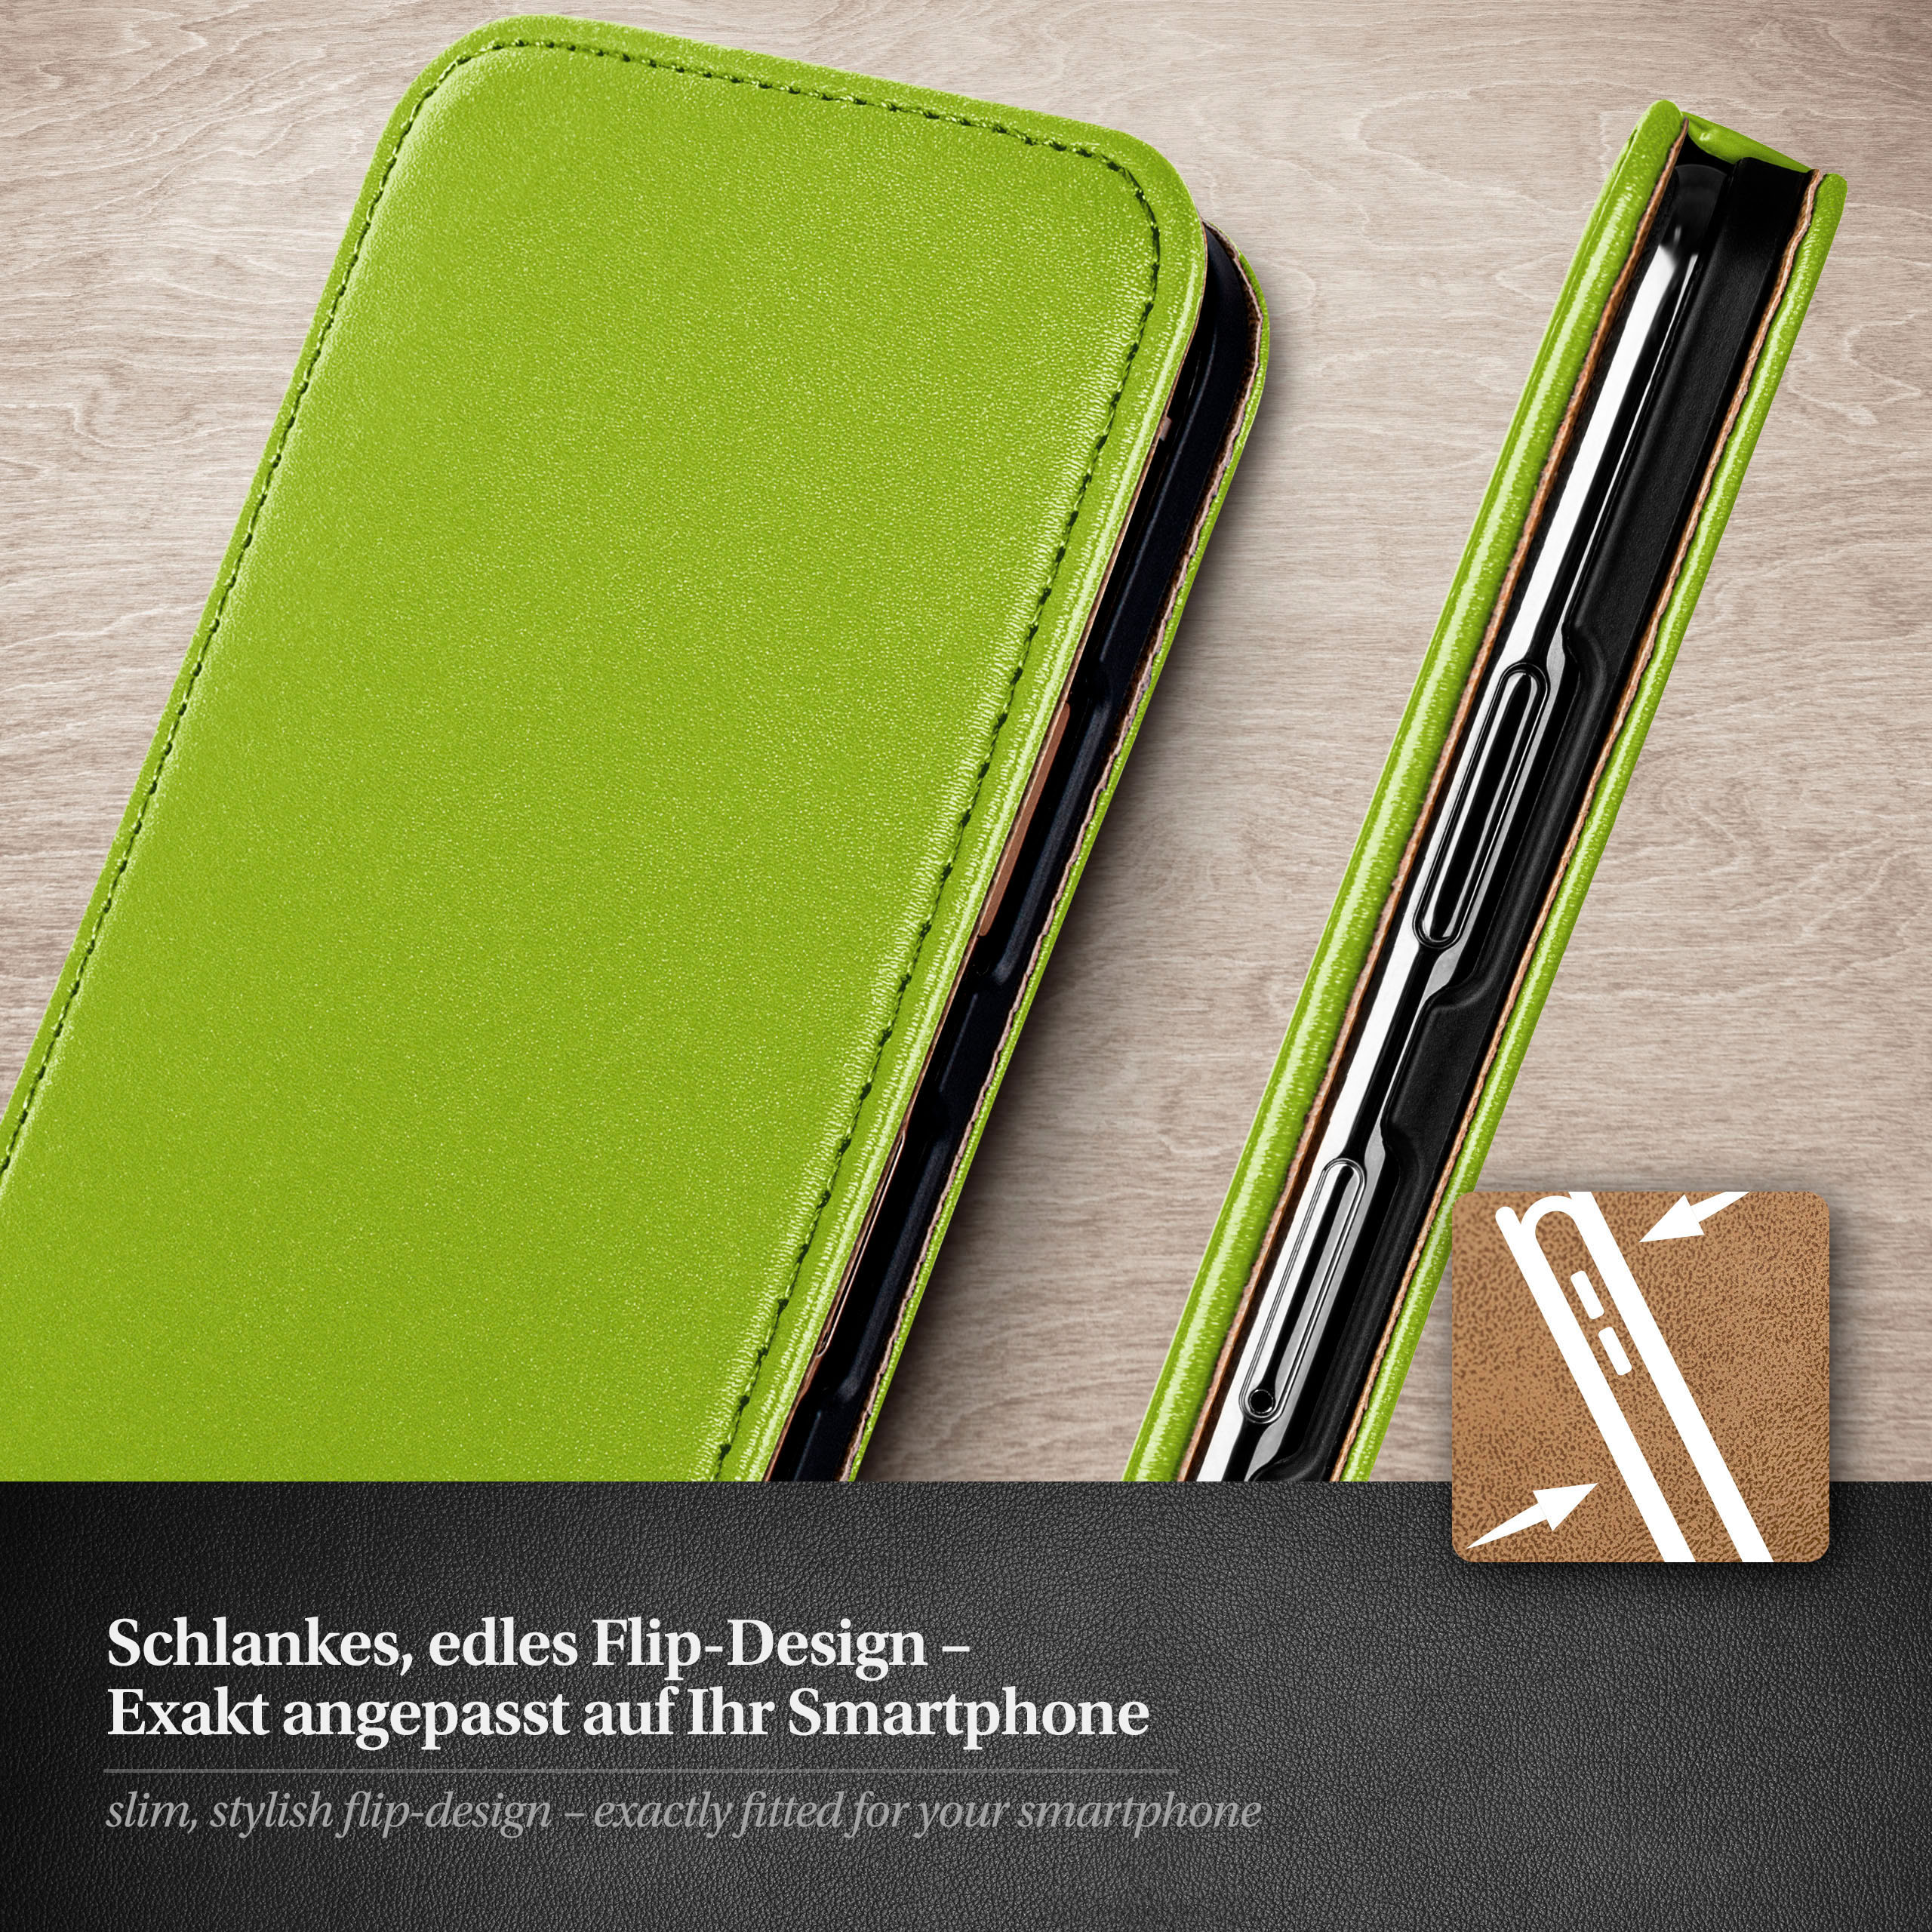 MOEX Flip Lime-Green Cover, Flip Nokia, Case, 520/525, Lumia